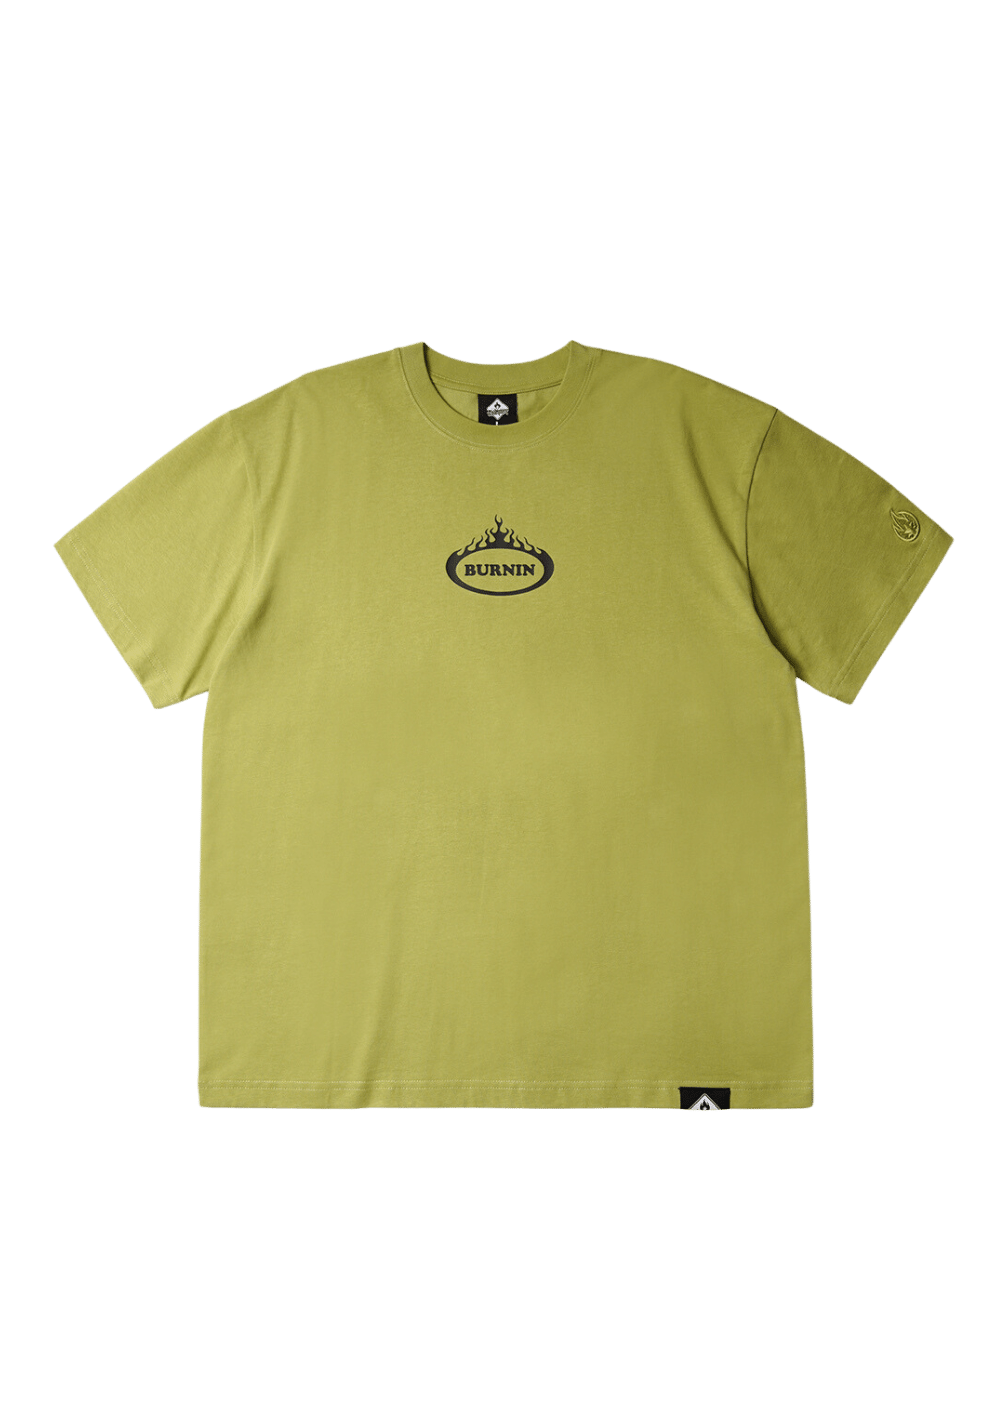 Flame Pattern Loose T-Shirt-Green - PSYLOS 1, Flame Pattern Loose T-Shirt-Green, T-Shirt, Burnin, PSYLOS 1